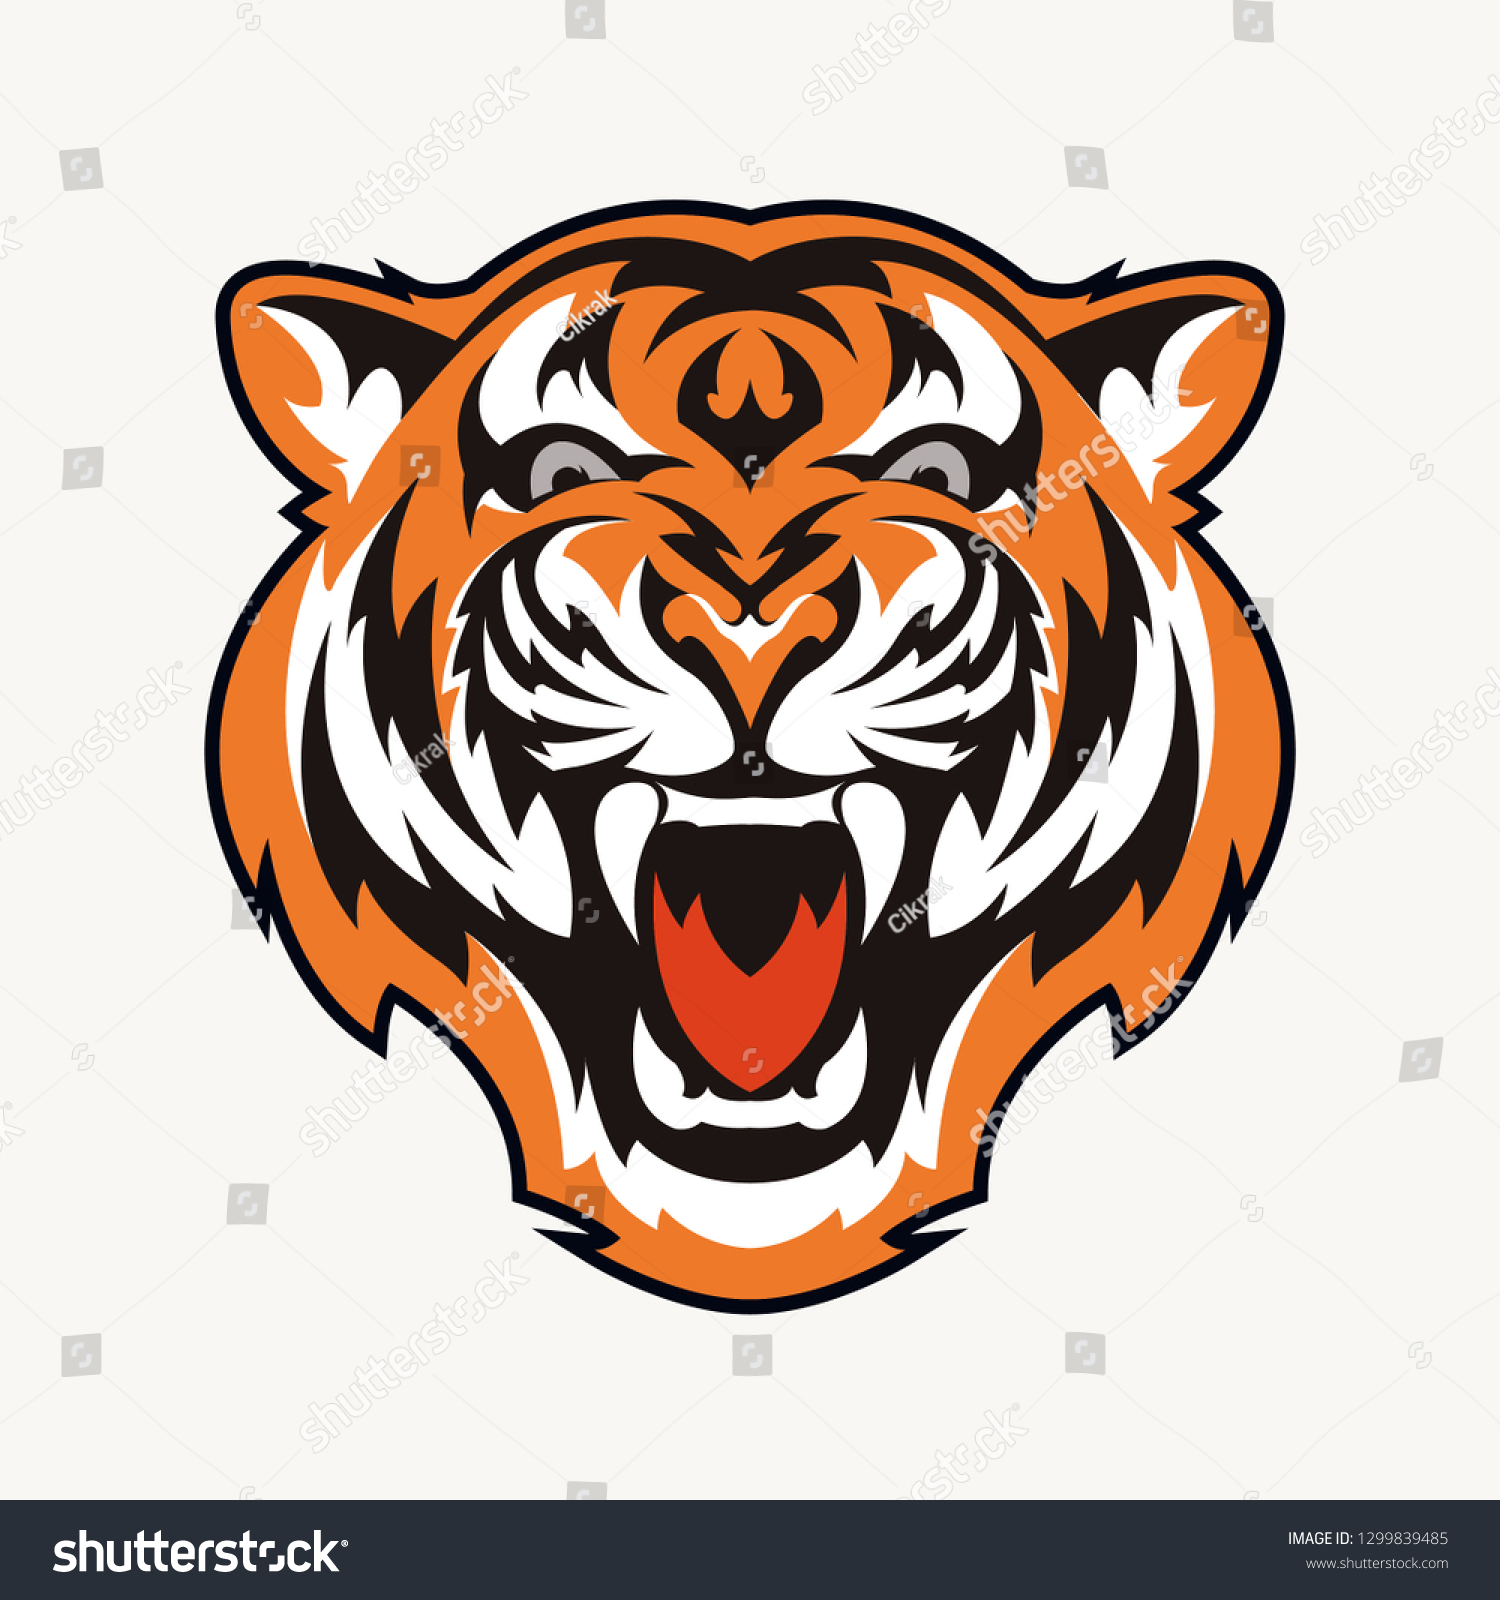 Head Tiger Vector Illustration Royalty Free Stock Vector 1299839485